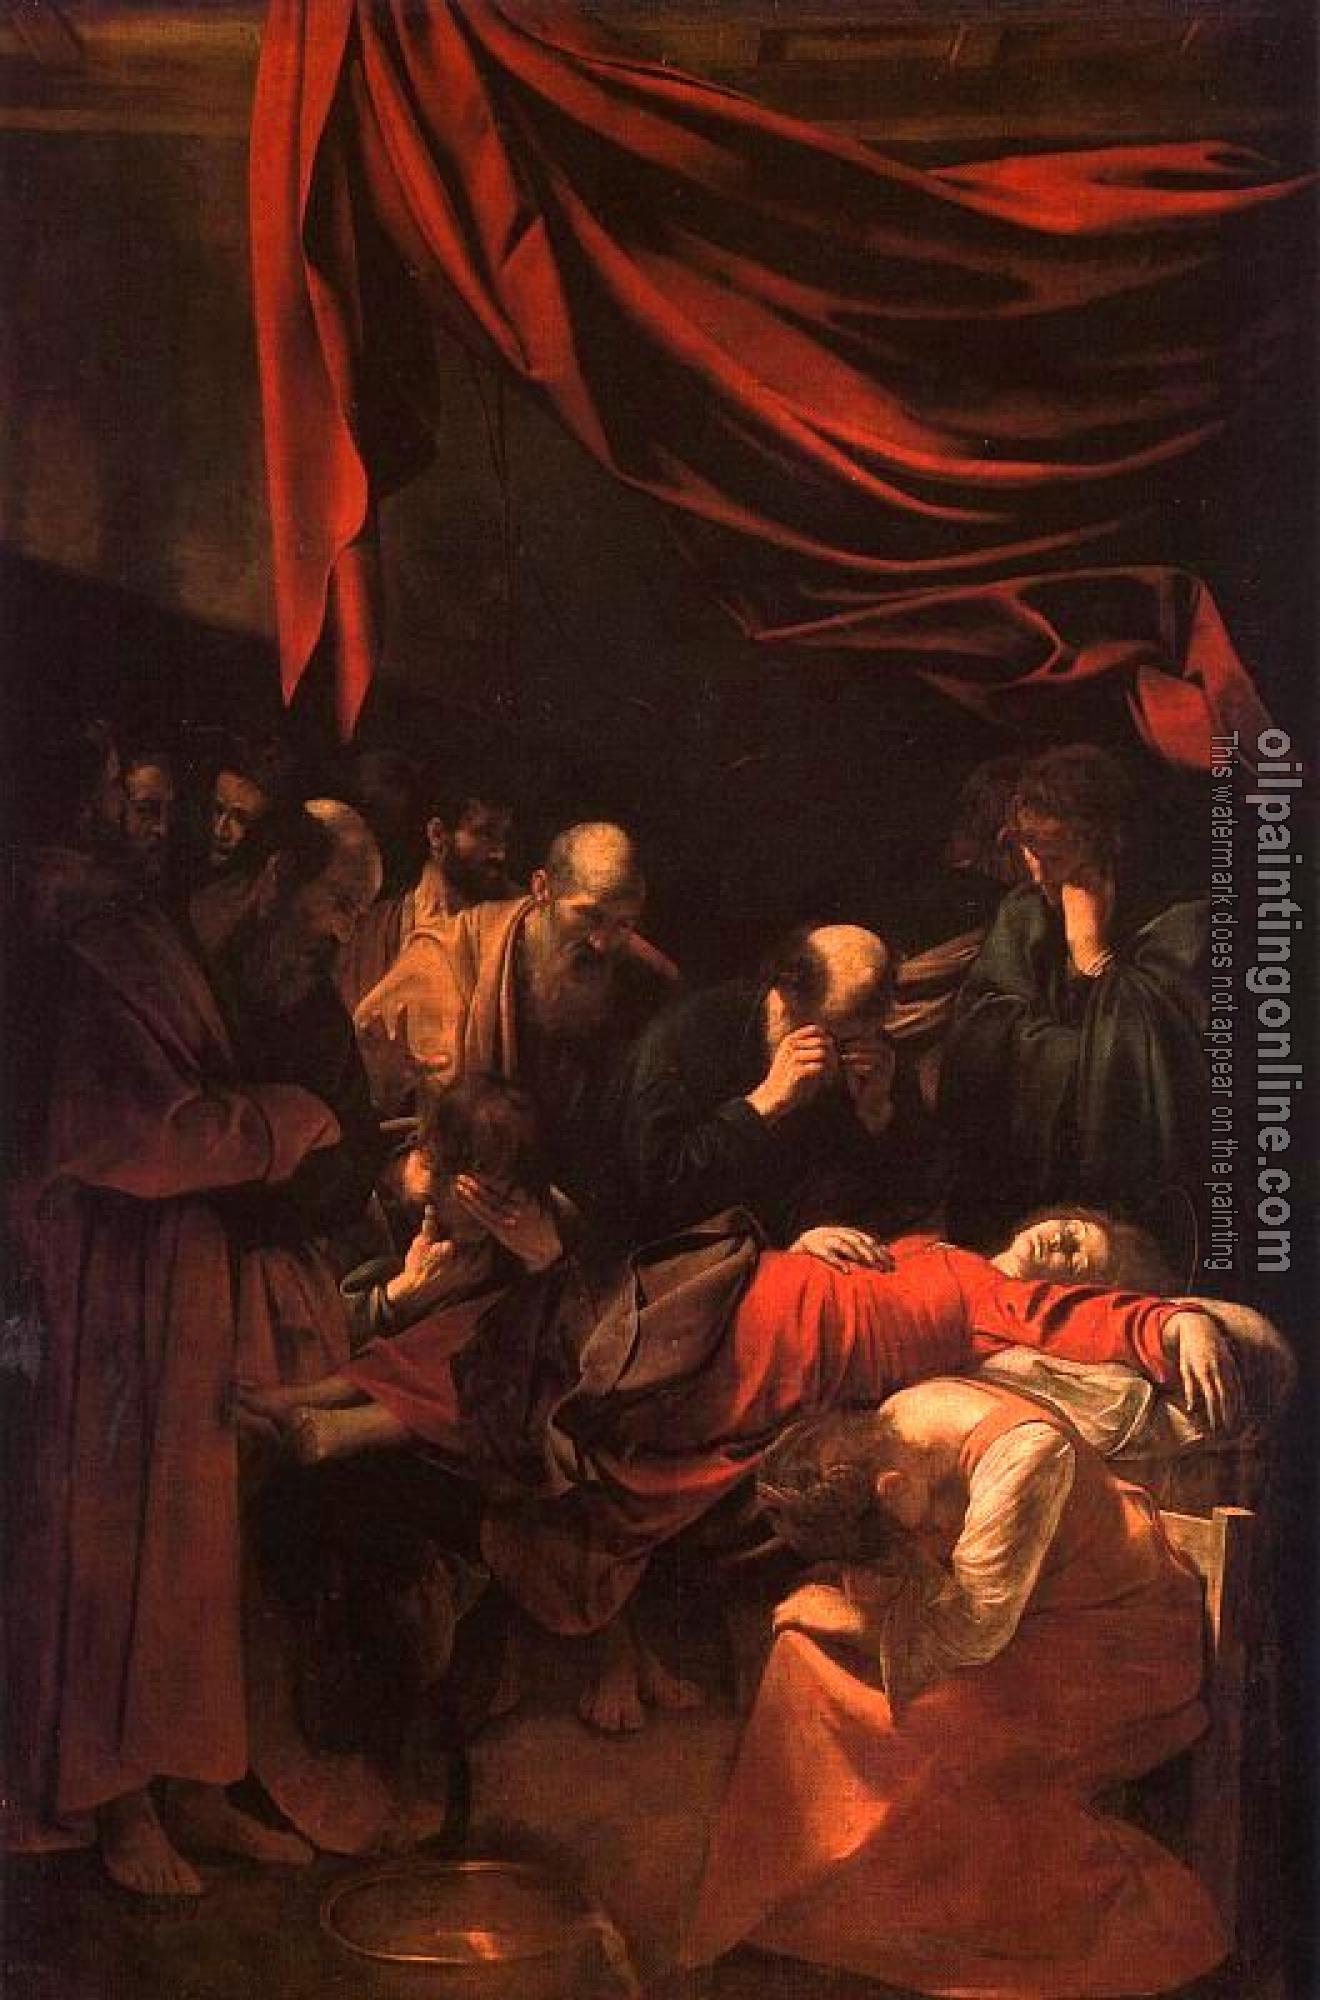 Caravaggio - The Death of the Virgin